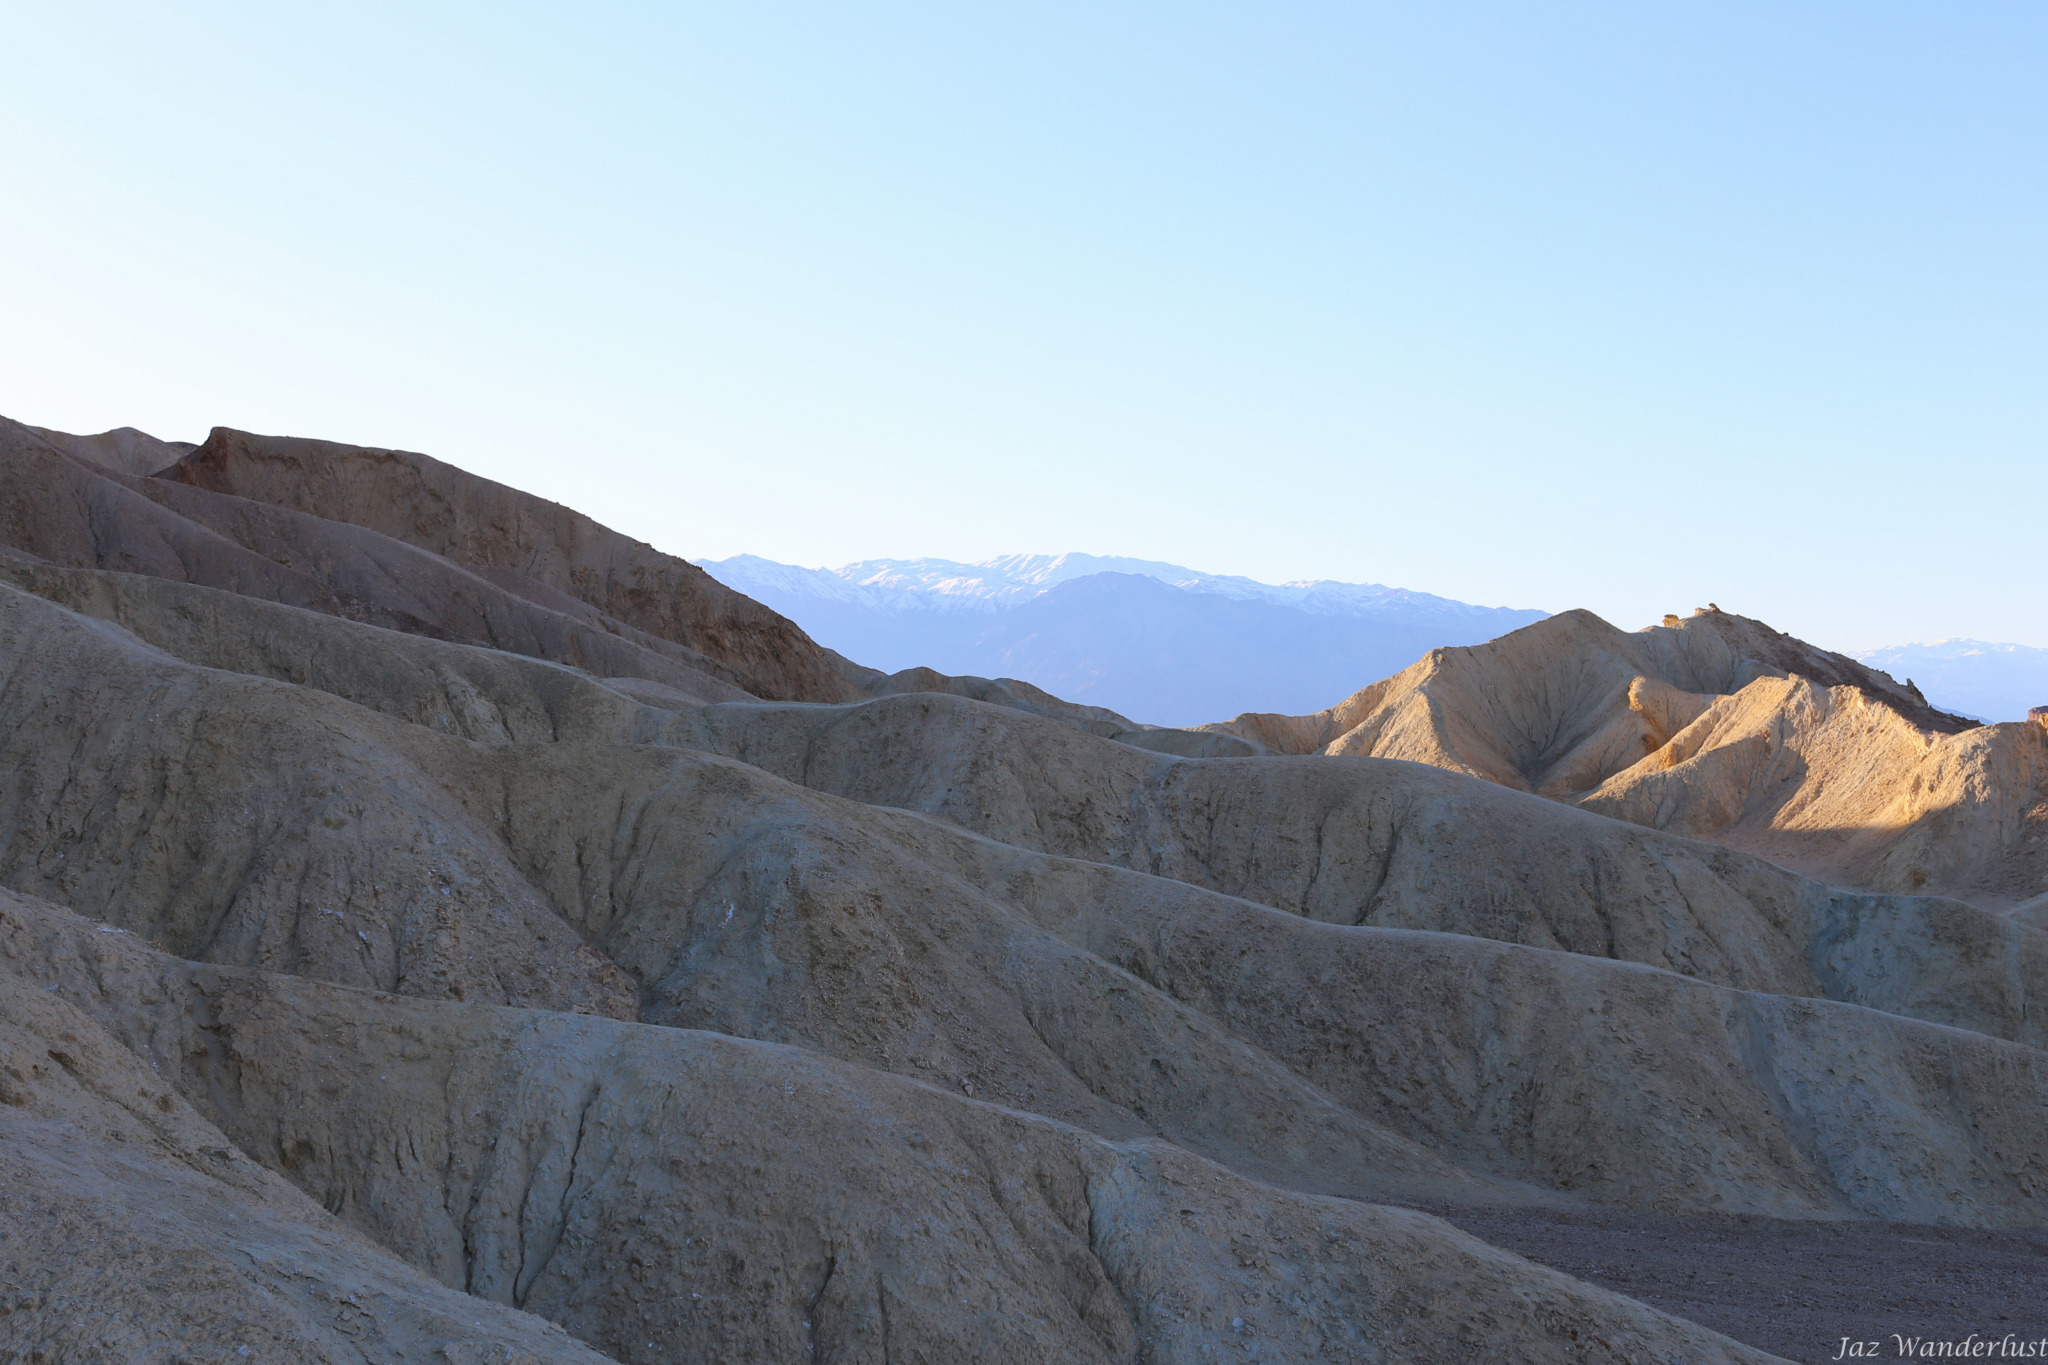 Twenty Mule Team Canyon at Death Valley. Photography by Jaz Wanderlust.